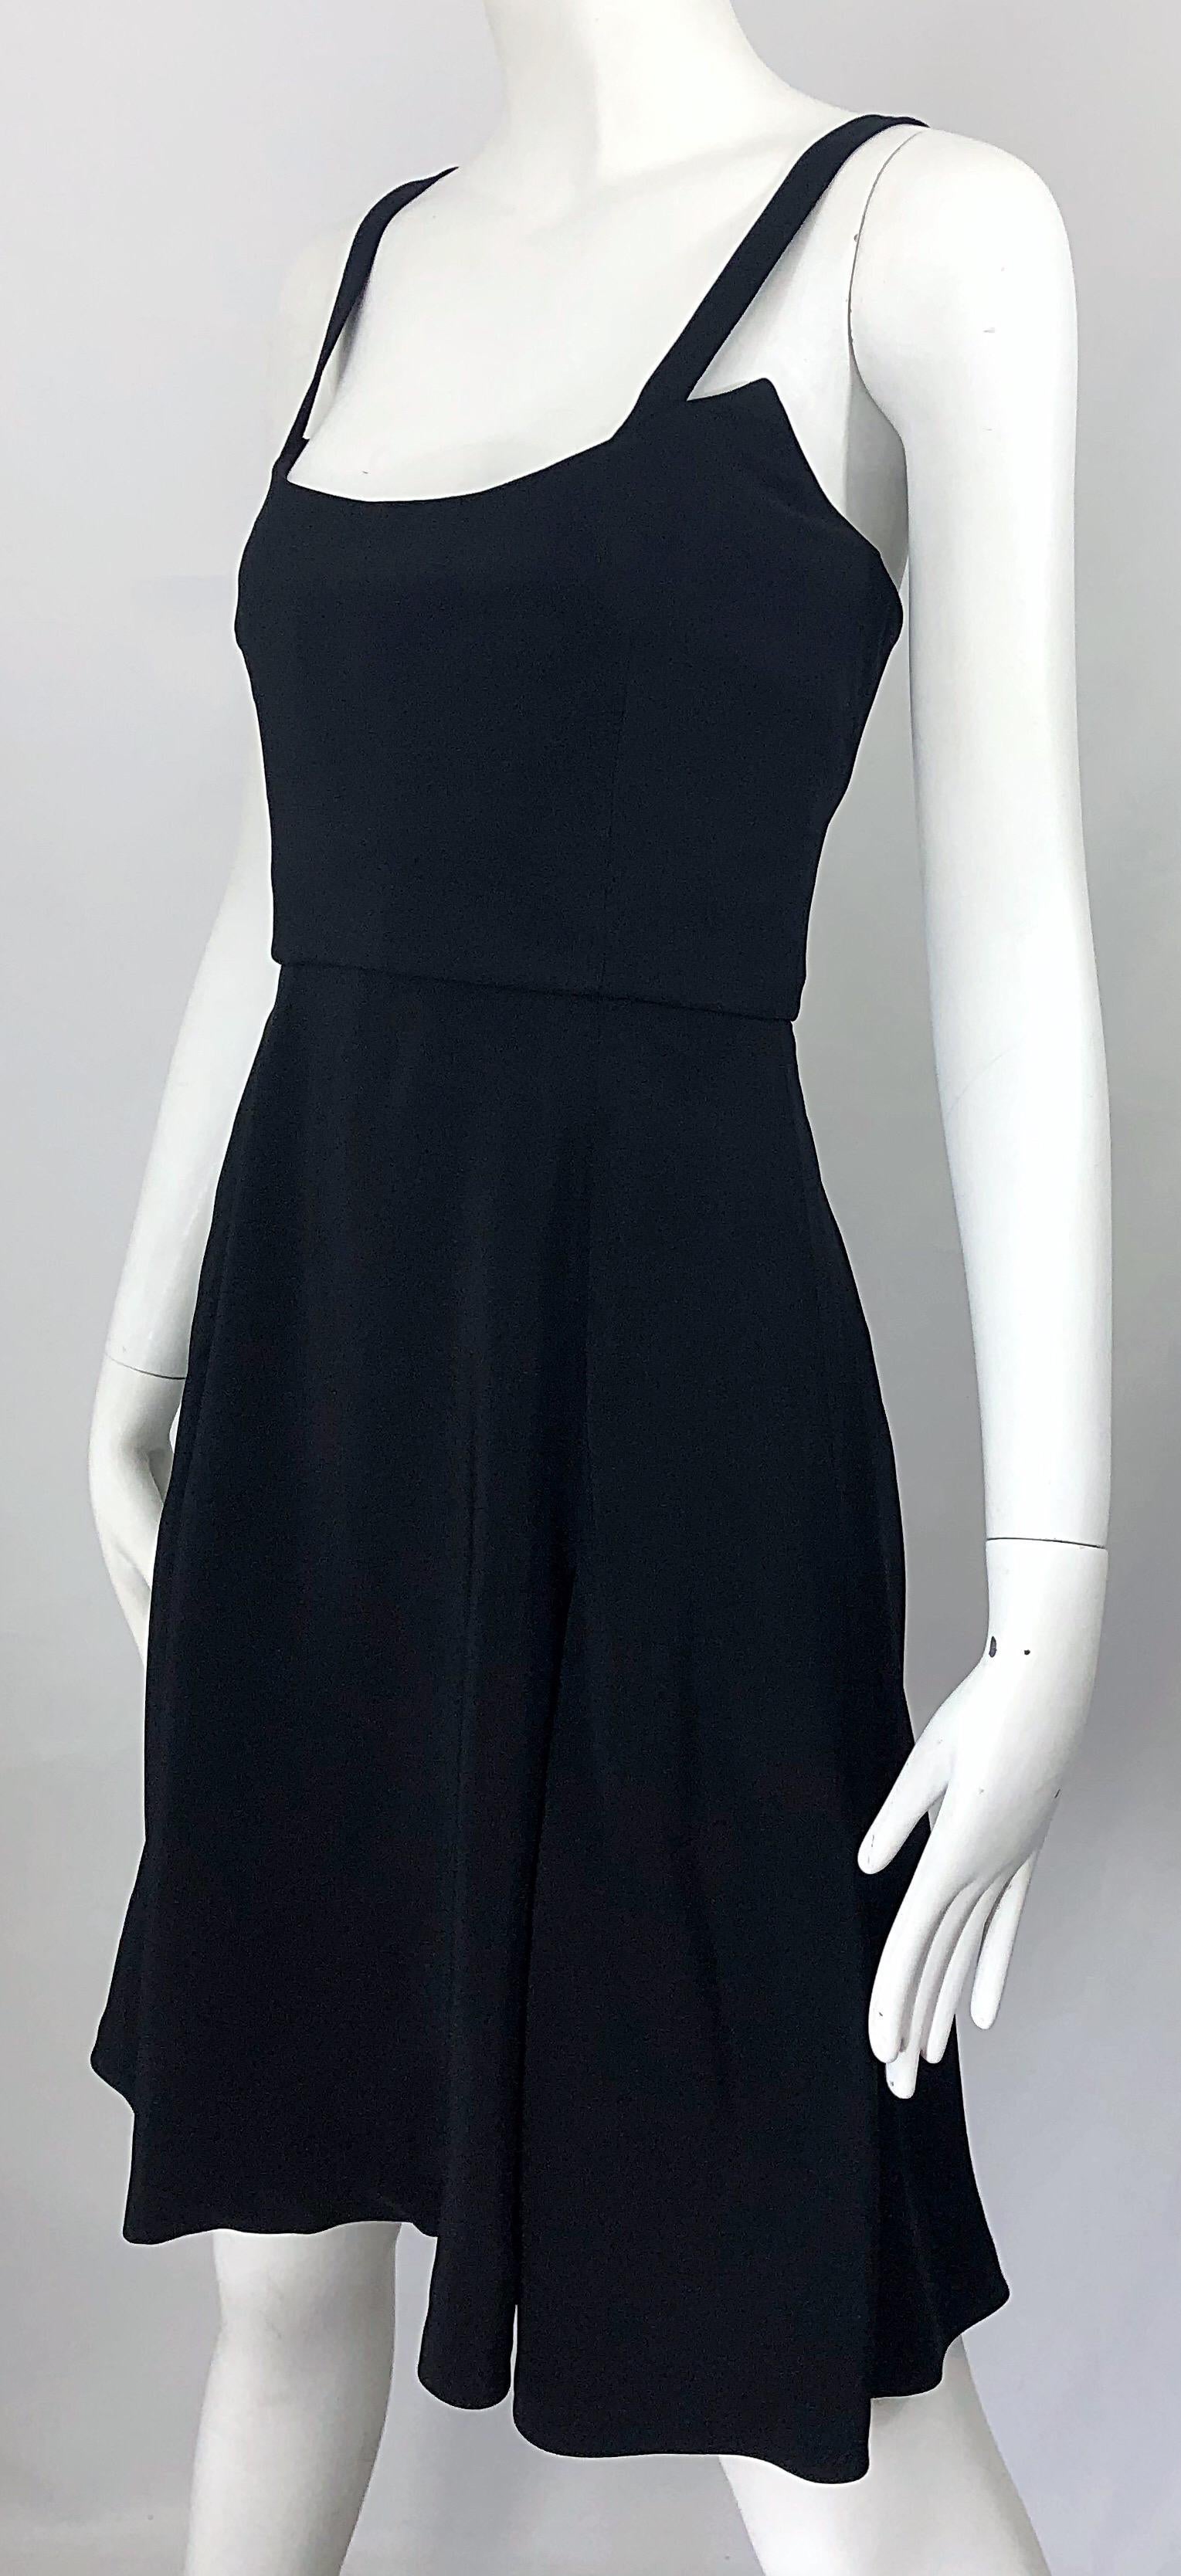 Women's 1990s Christian Lacroix Avant Garde Size 36 2 /4 Vintage Black 90s Skater Dress For Sale